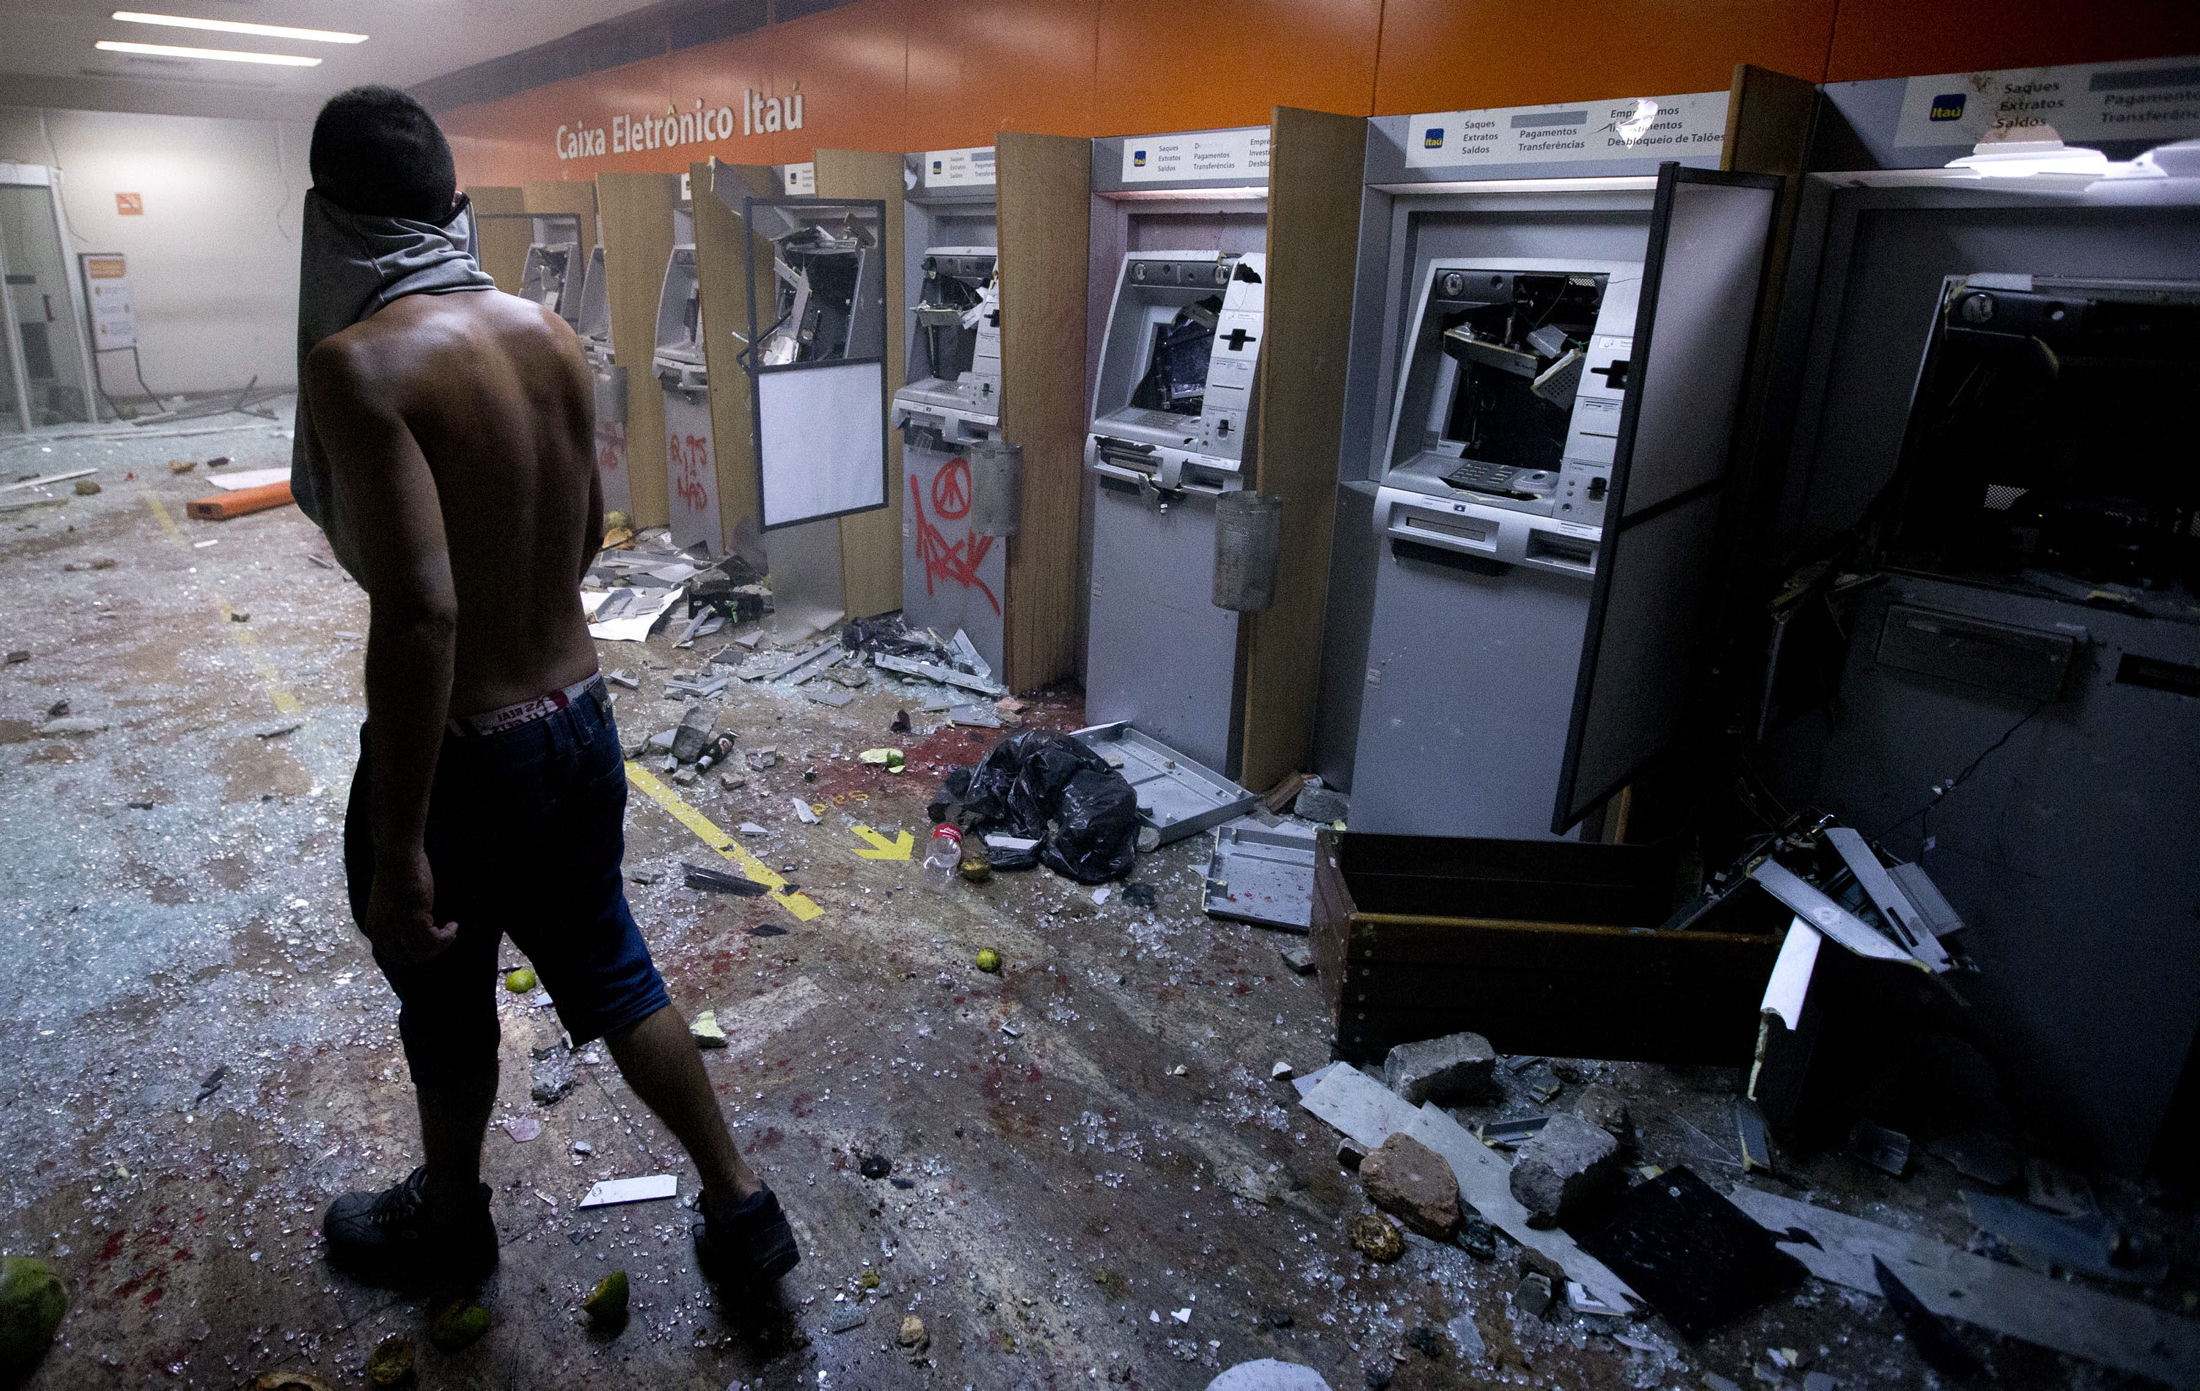 Cash machines in a bank in Rio de Janeiro, Brazil. June 17th 2013